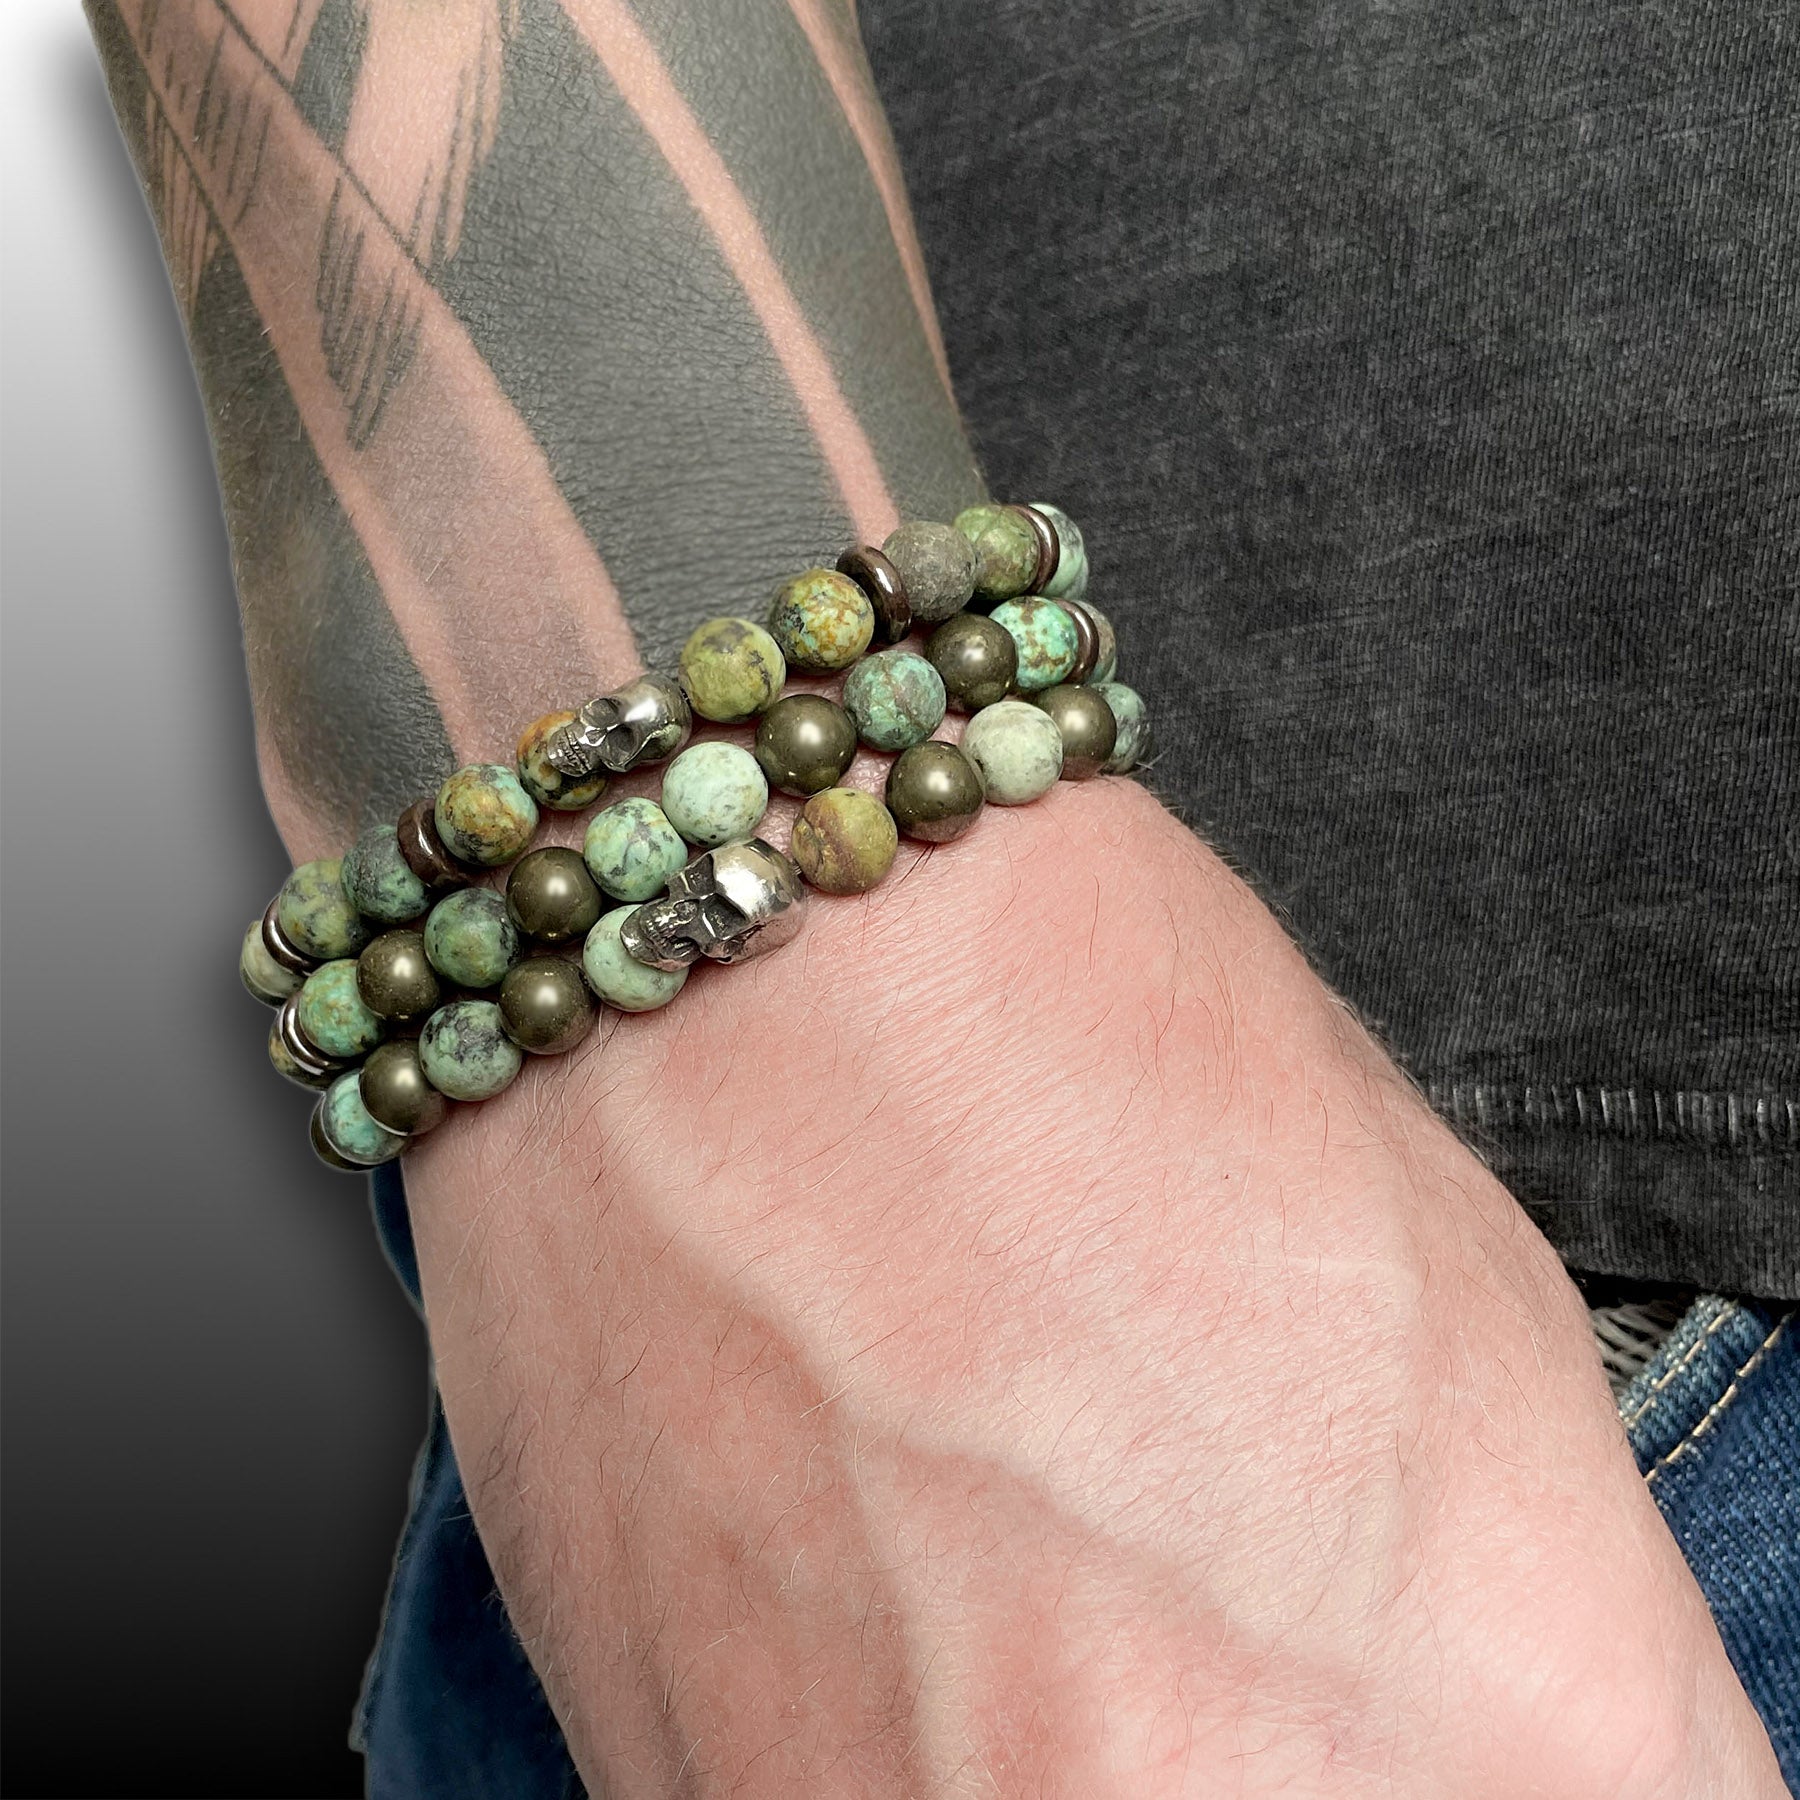 Turquoise gemstone bracelet for men by Rock My Wings